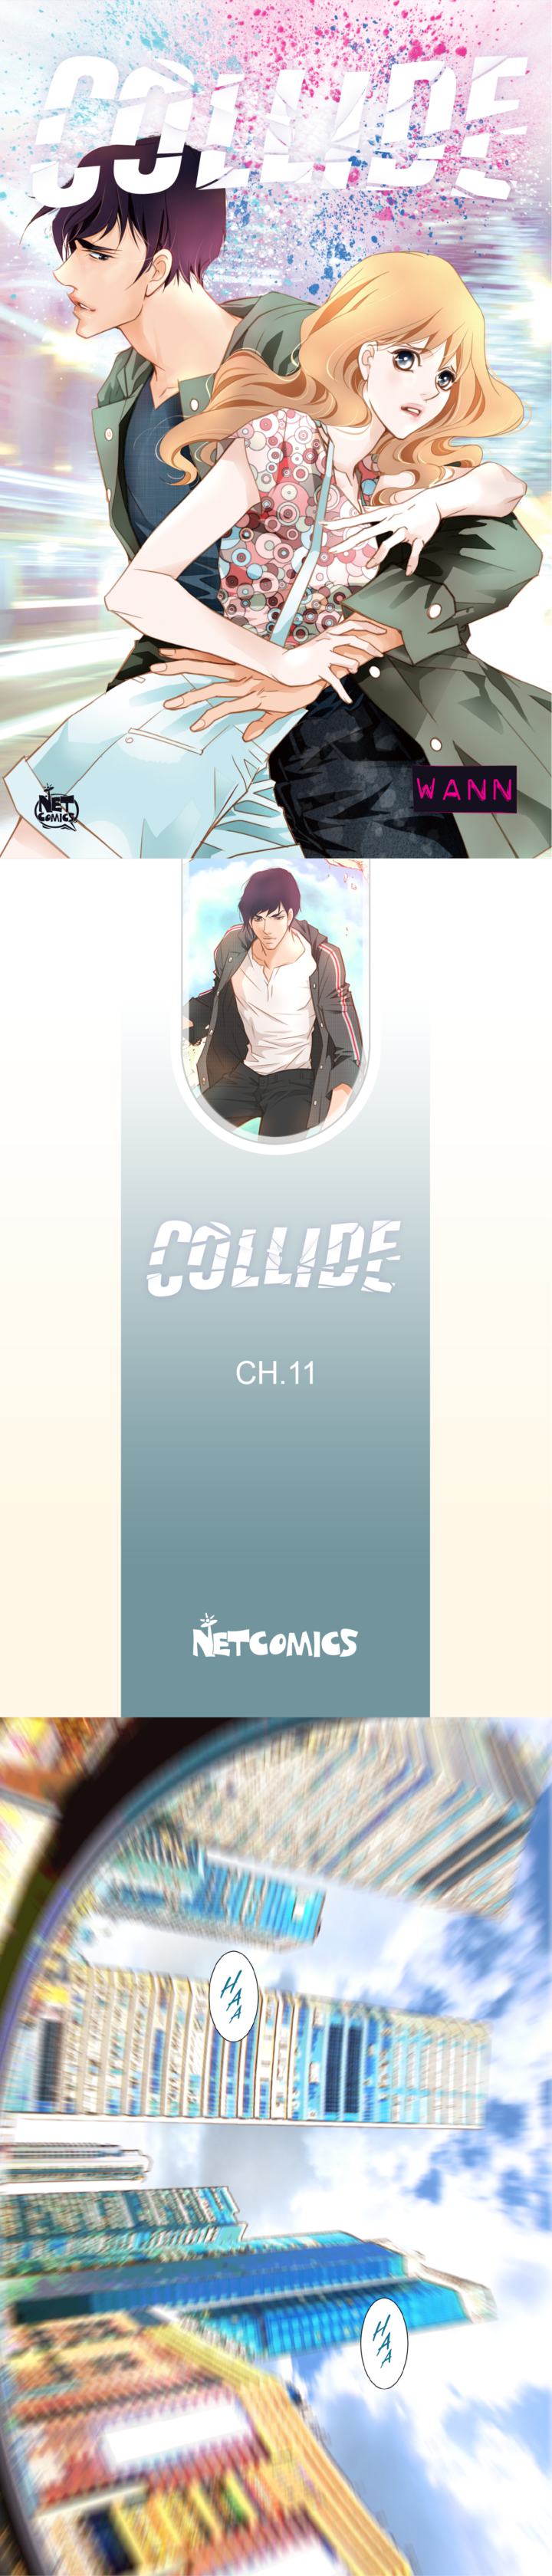 Collide Ch.11